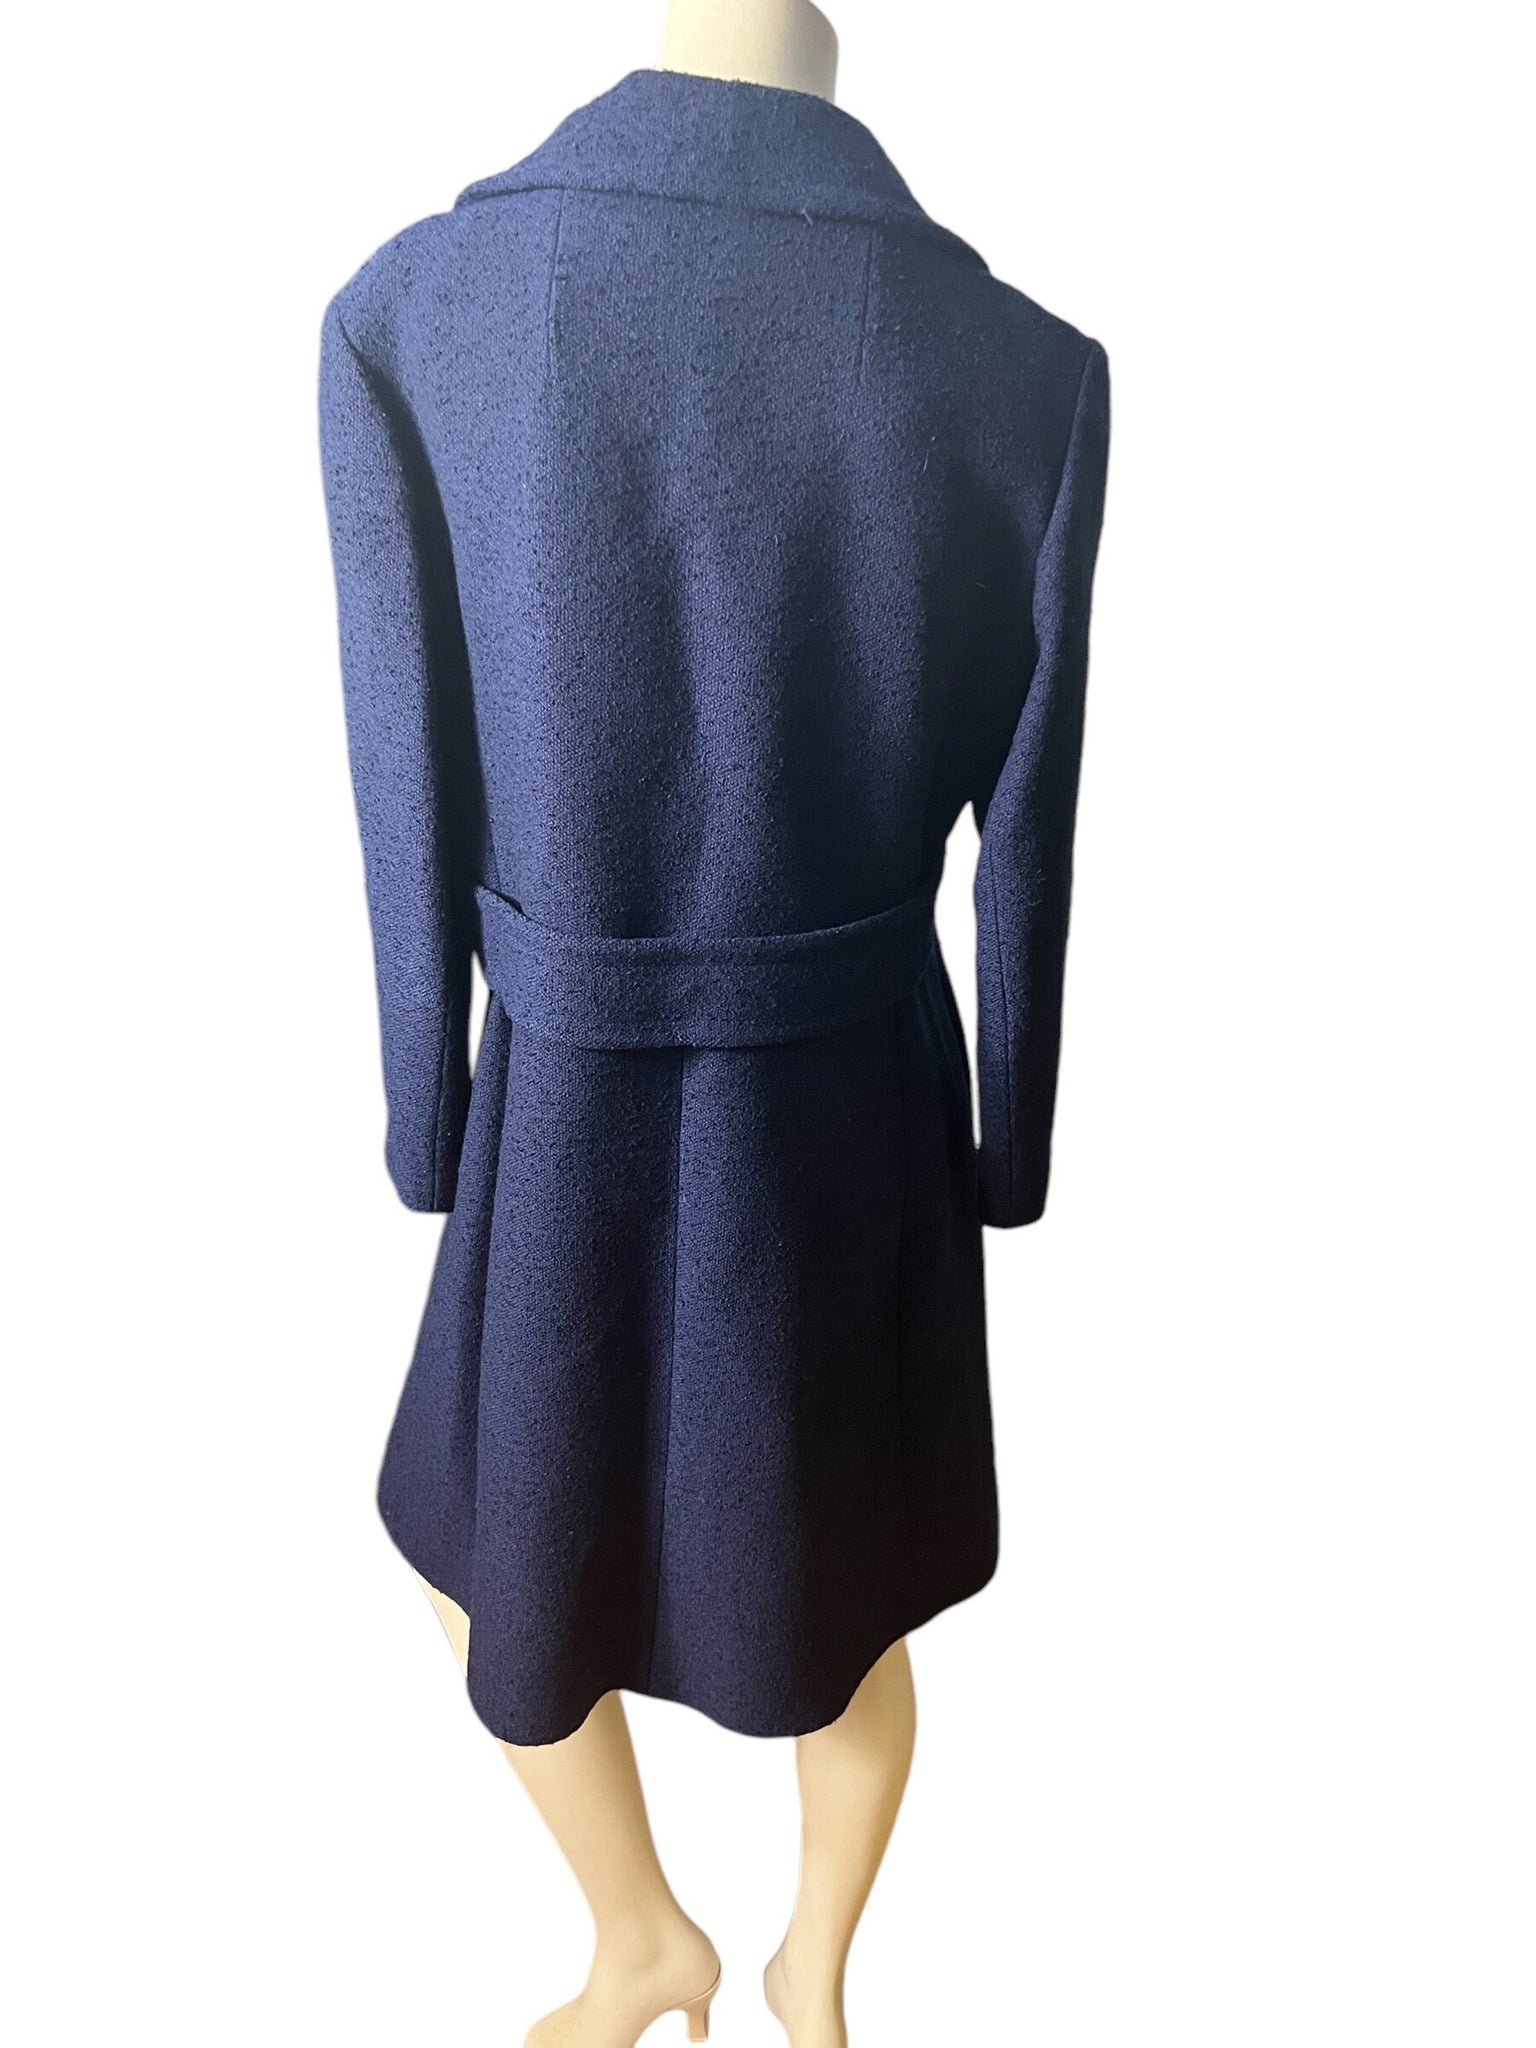 Vintage 60’s blue wool long coat M